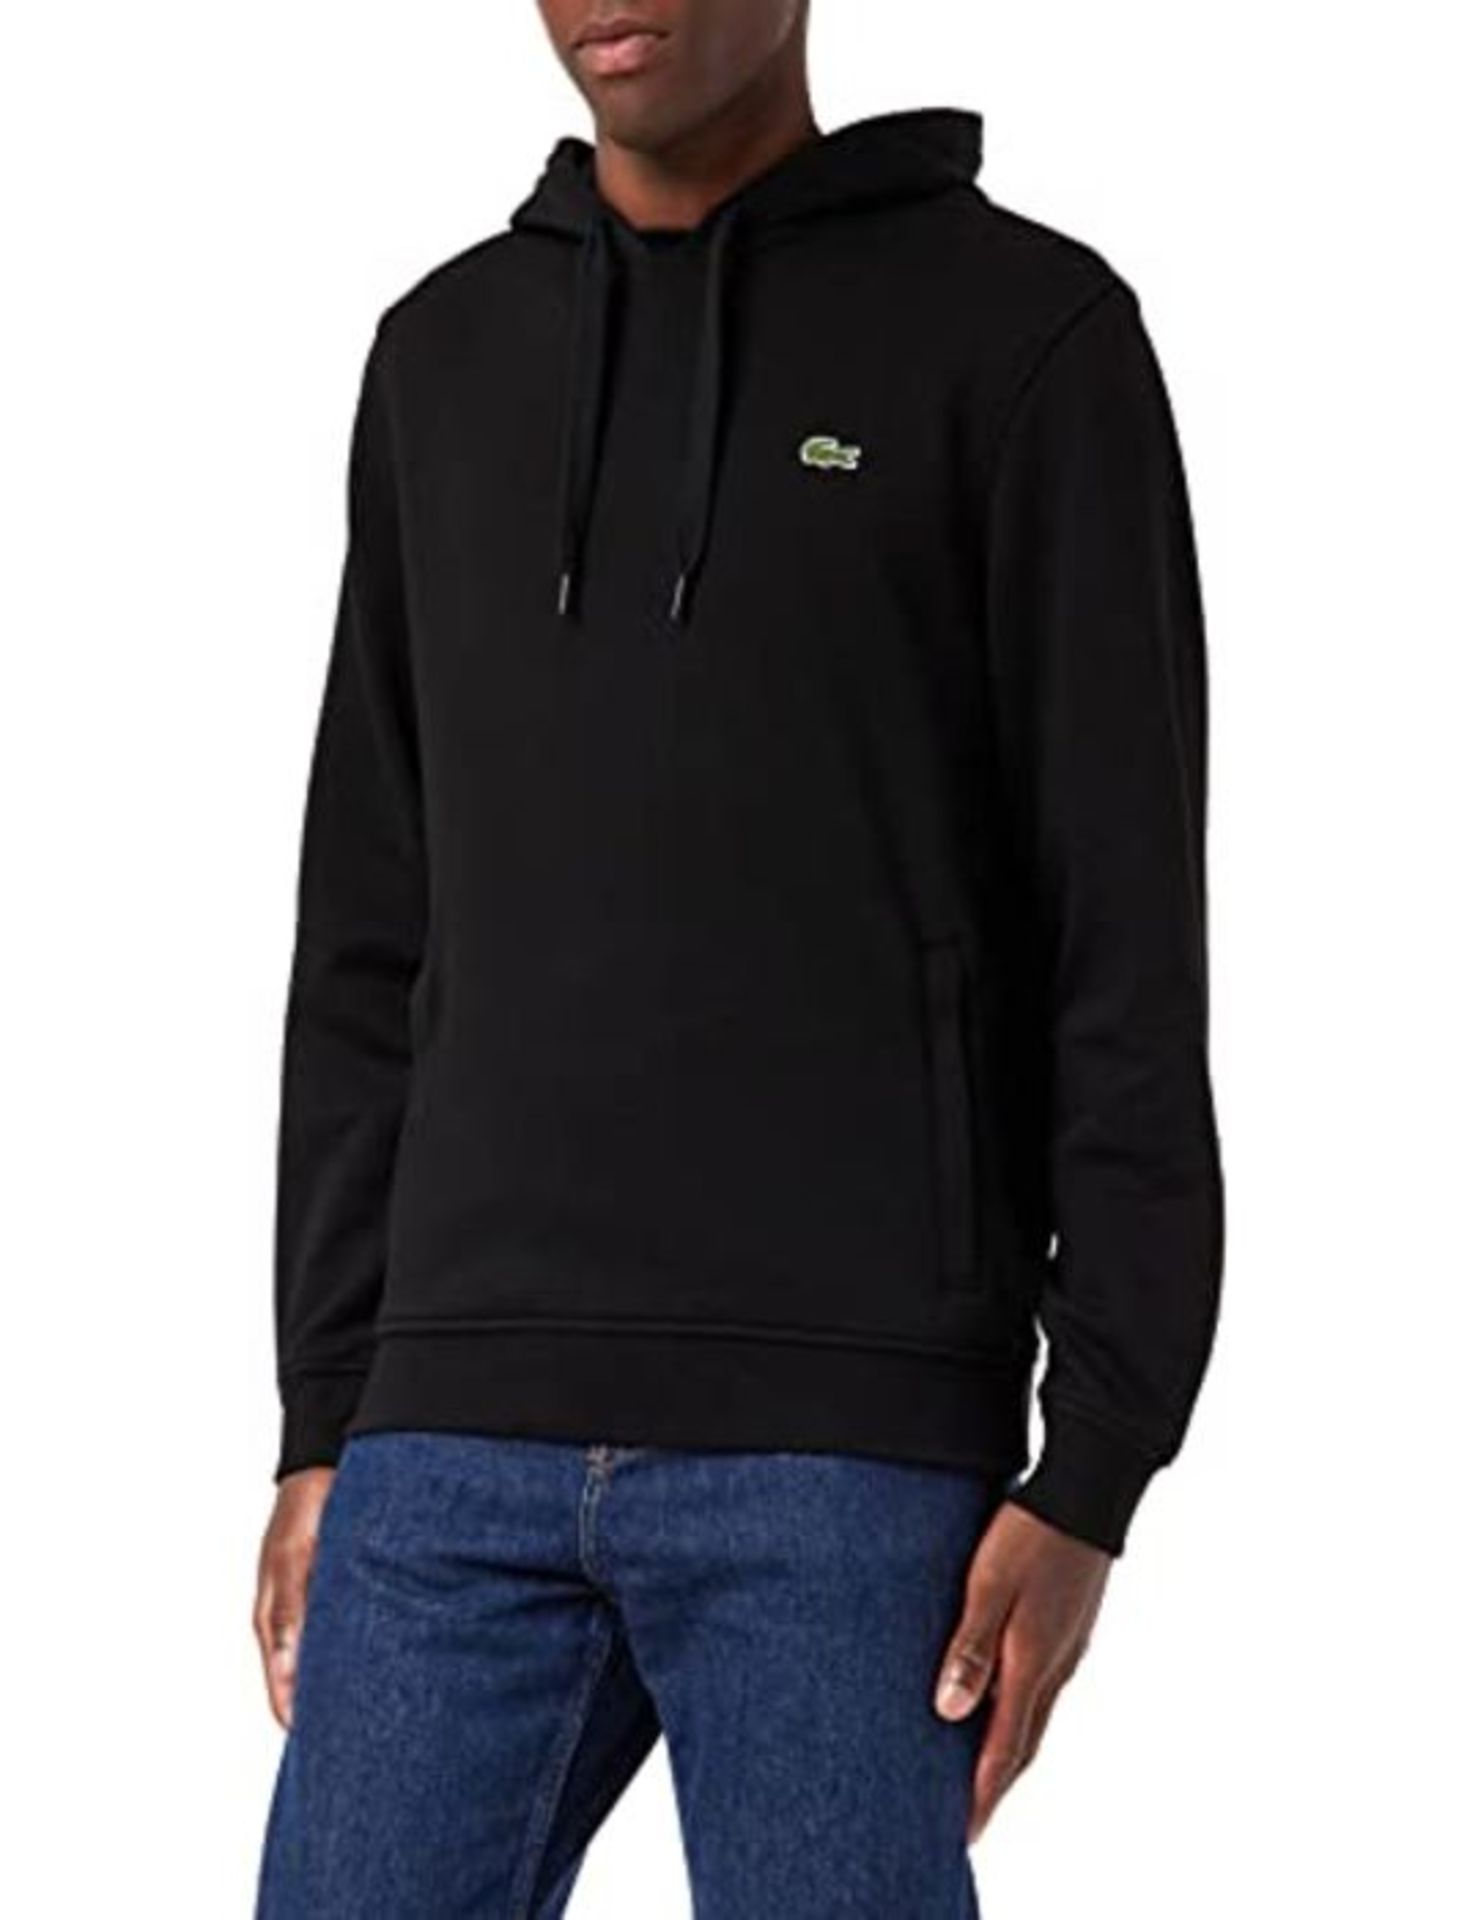 RRP £55.00 Lacoste Sport Sweatshirt, Homme, SH1527, Noir/Noir, M